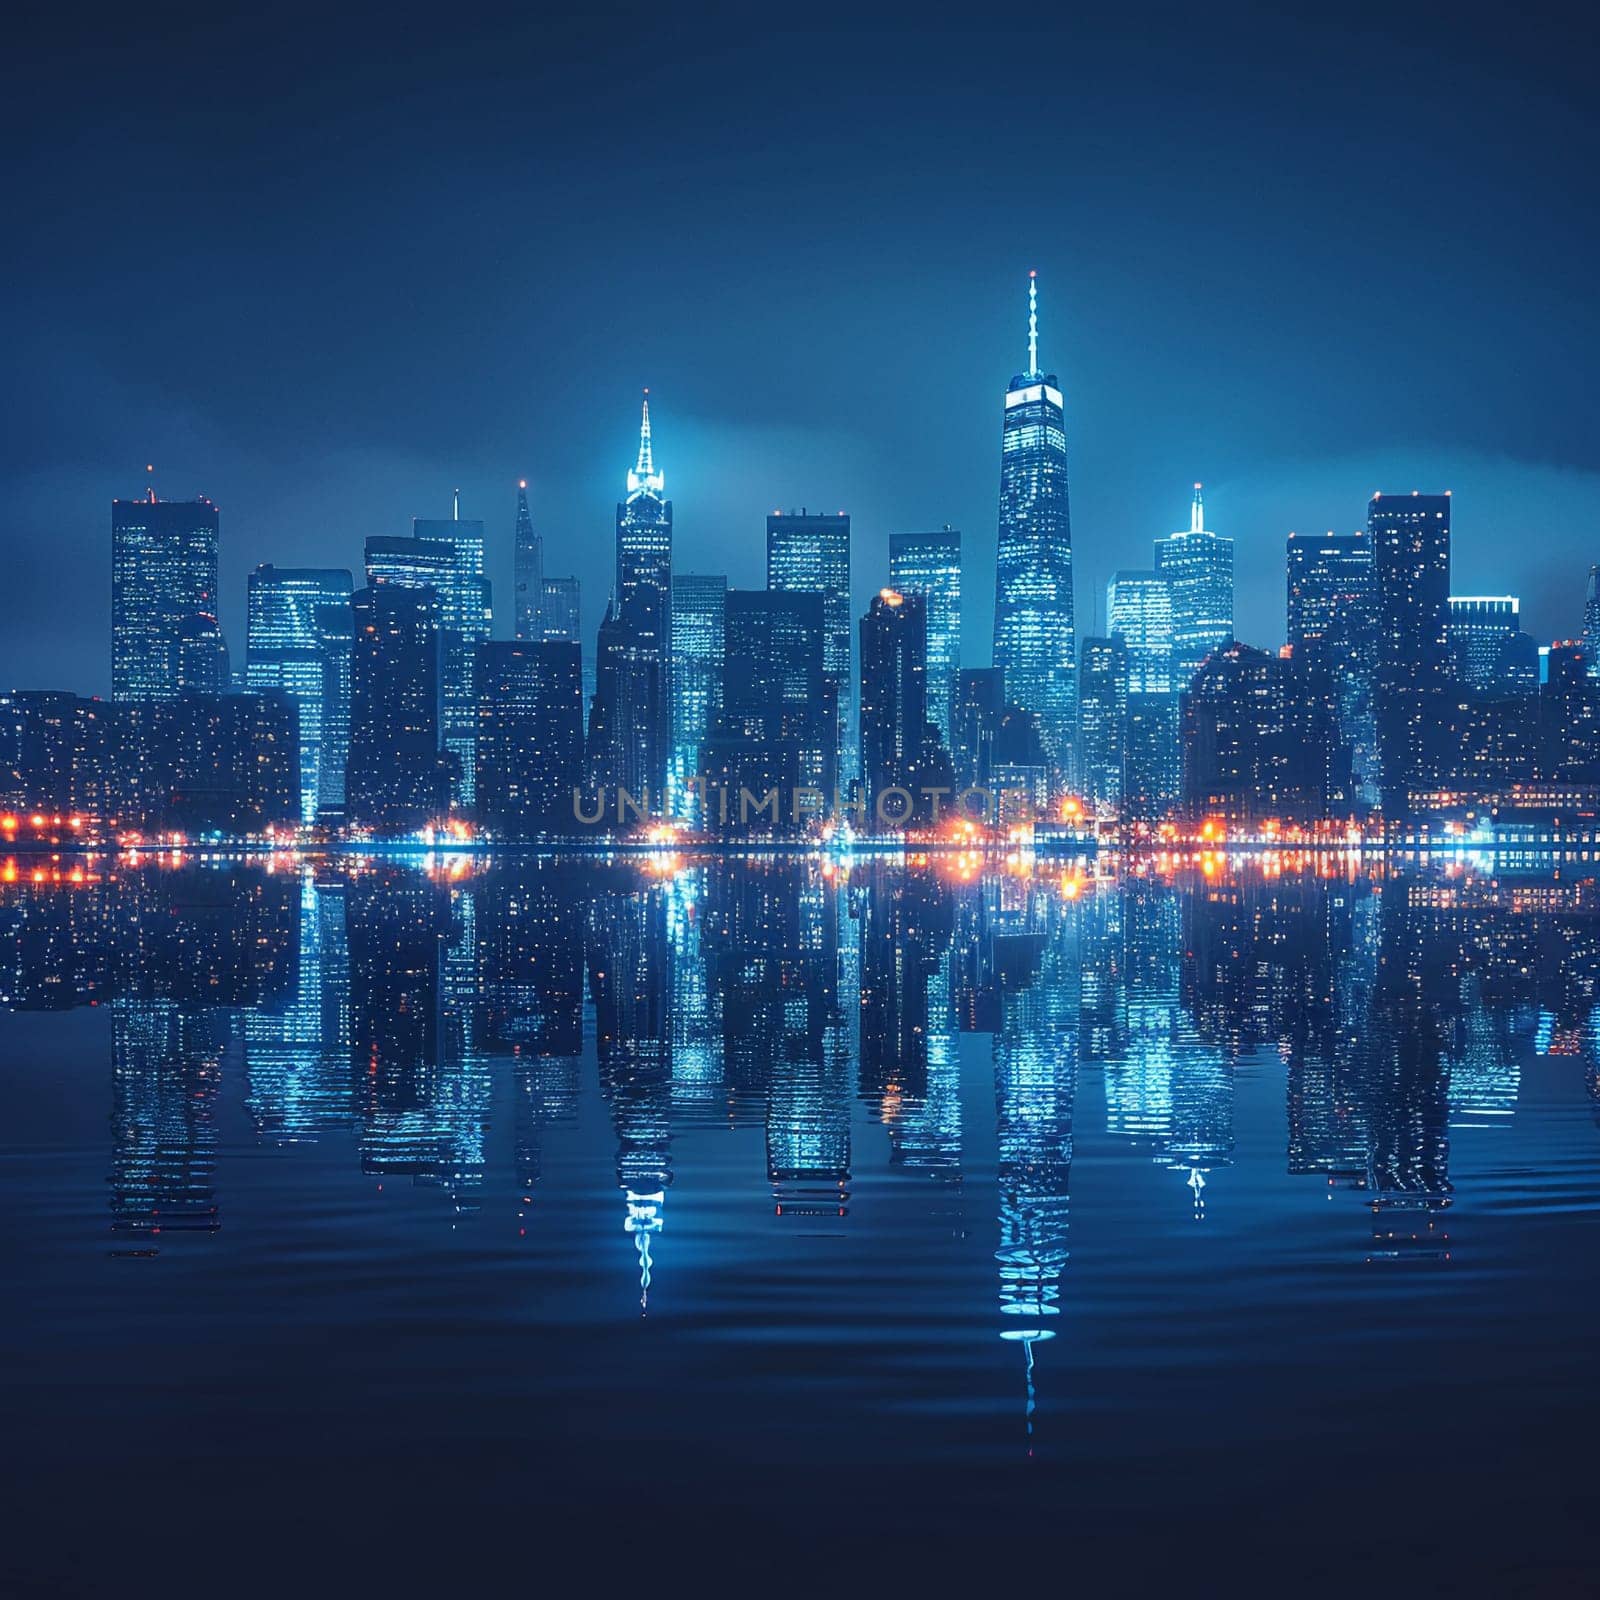 Illuminated city skyline at night by Benzoix